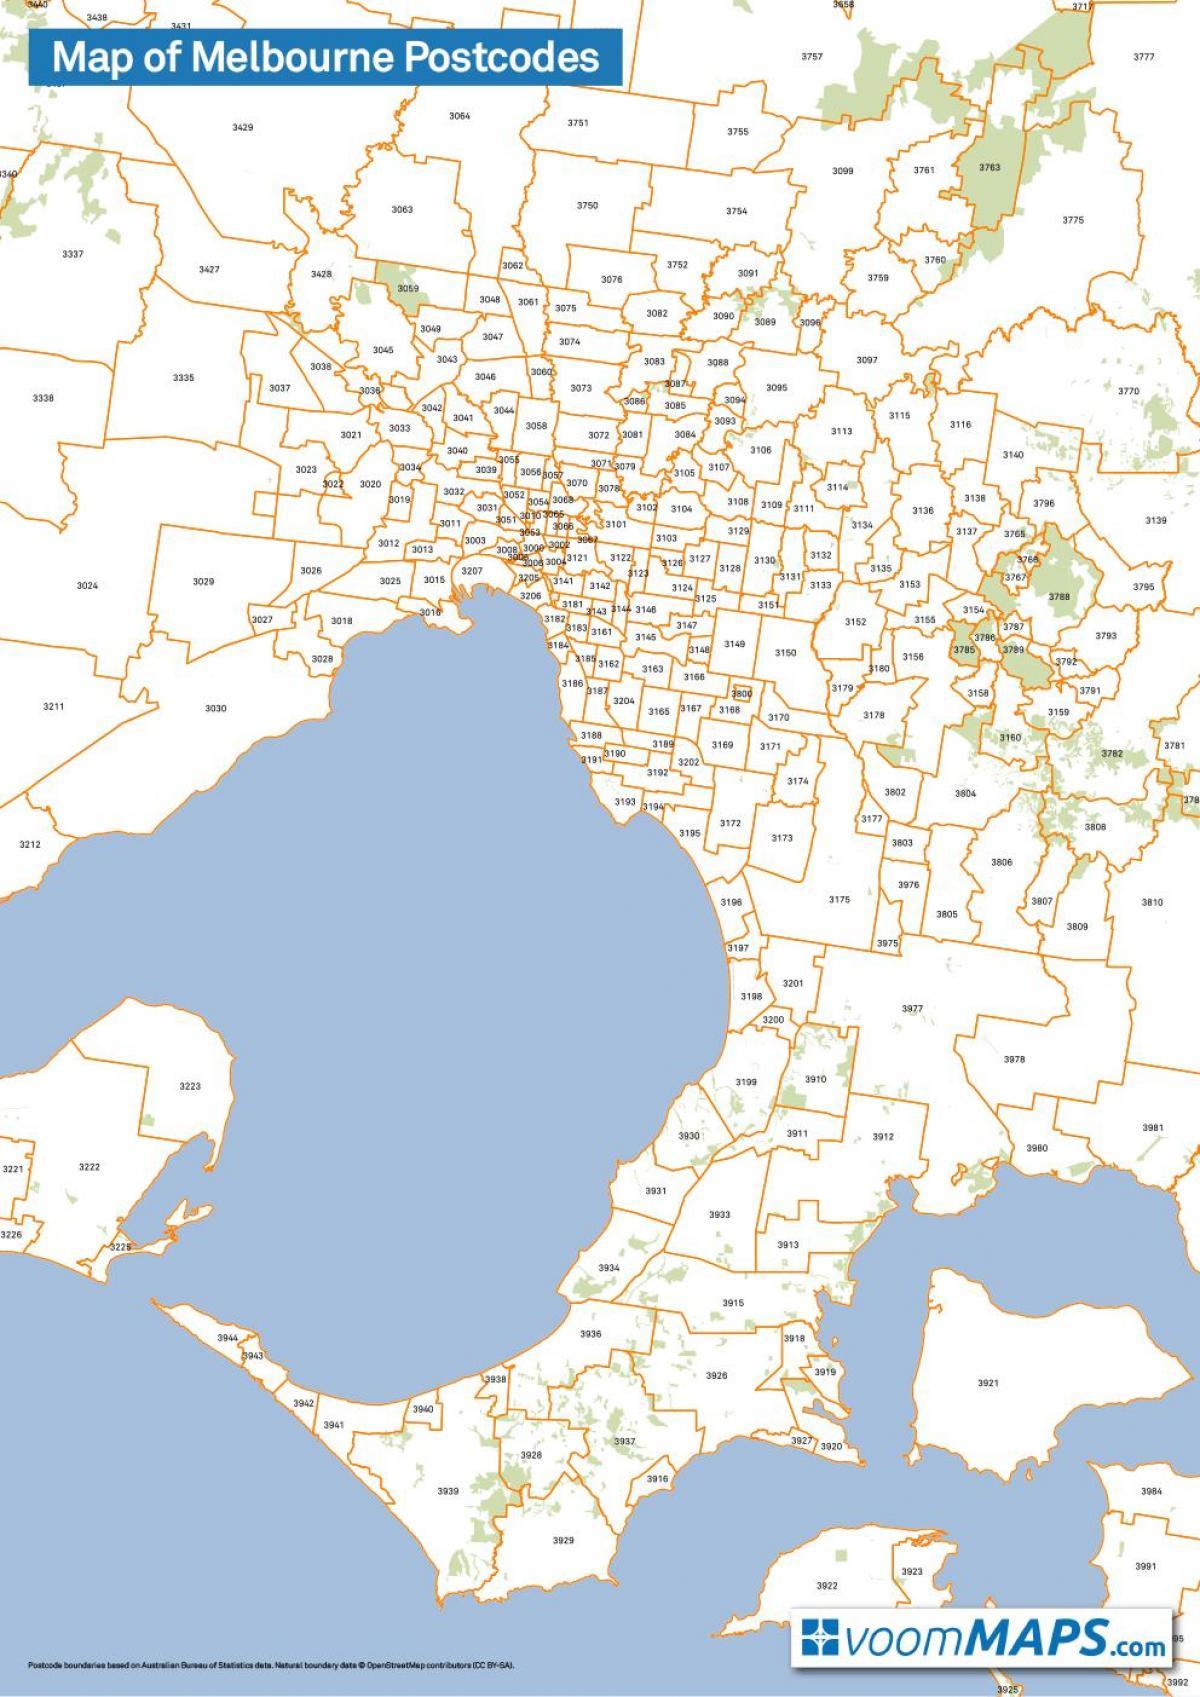 Melbourne Postcodes Map 